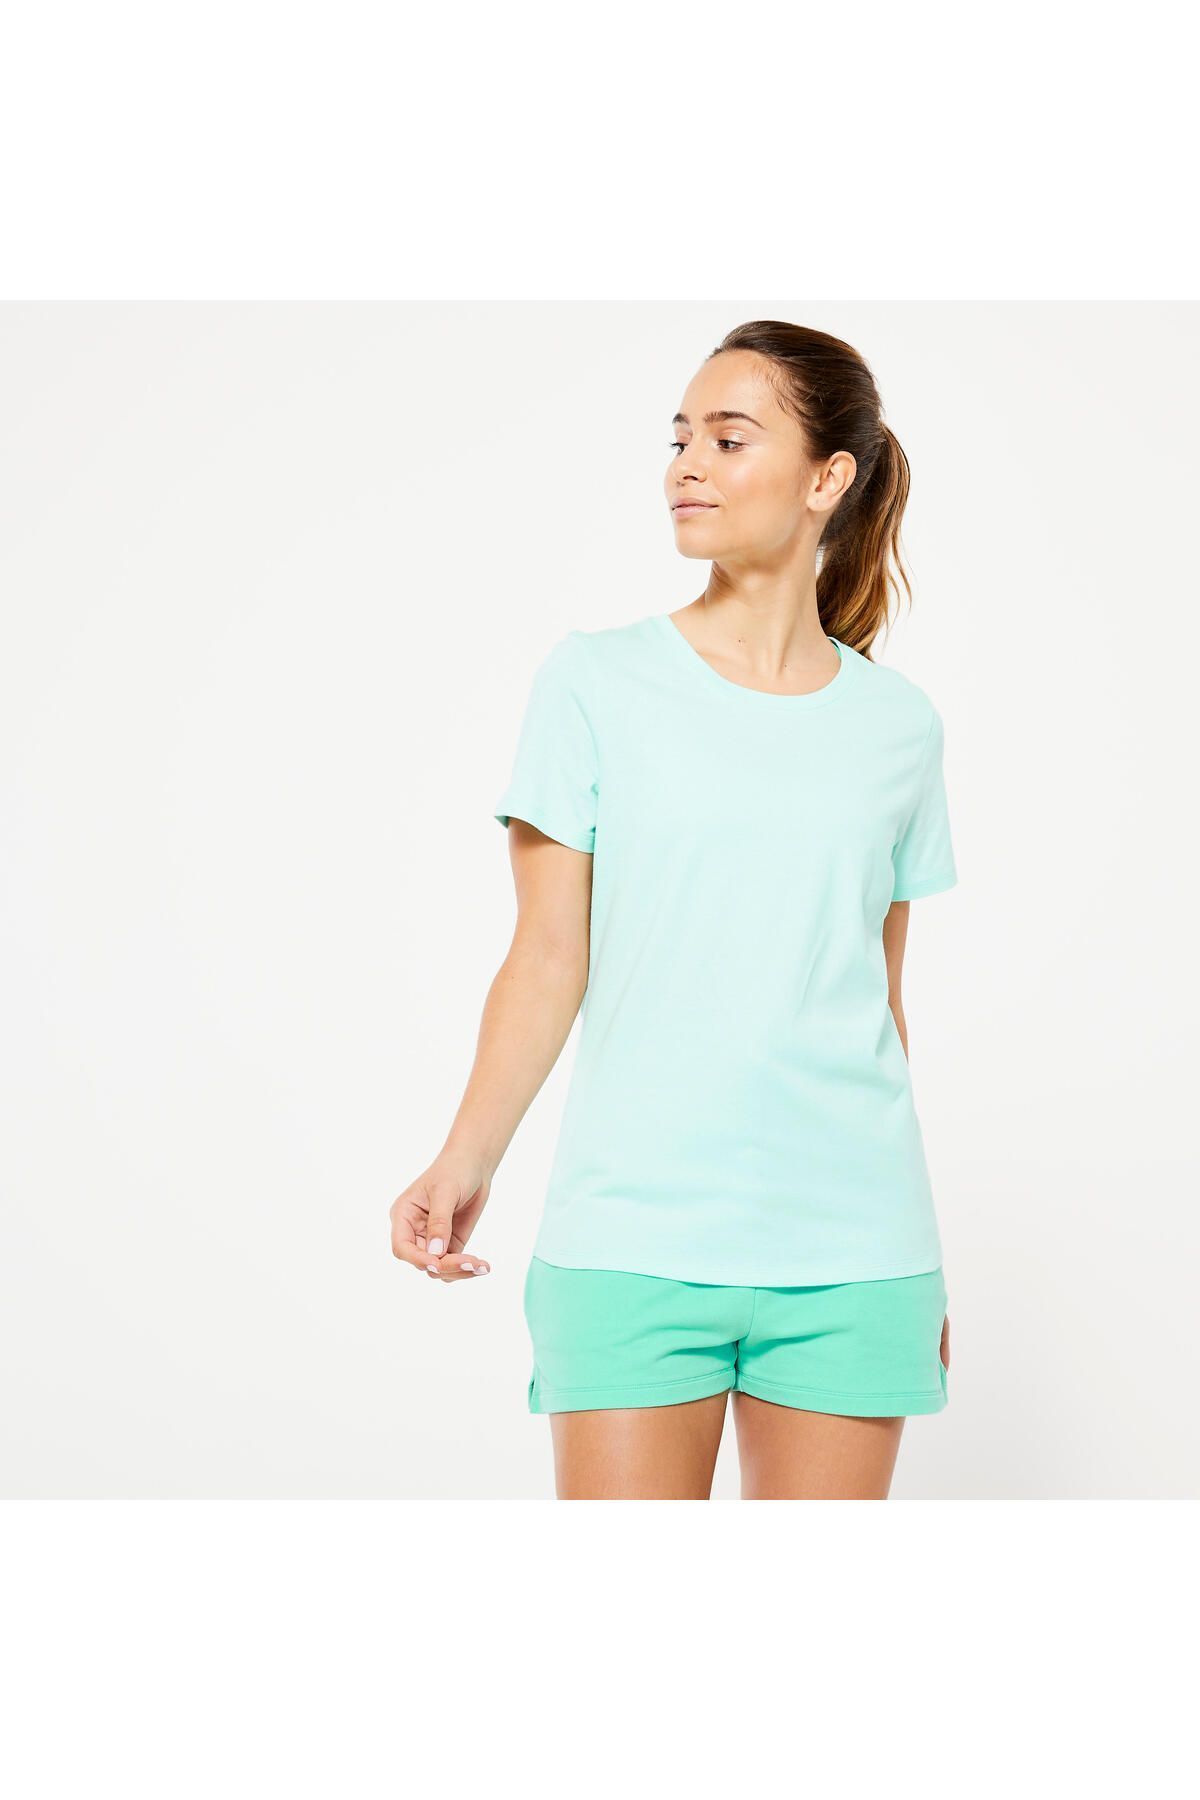 Decathlon Kadın Pastel Yeşil Regular Spor Tişörtü 500 Essentials - Fitness Hafif Antrenman